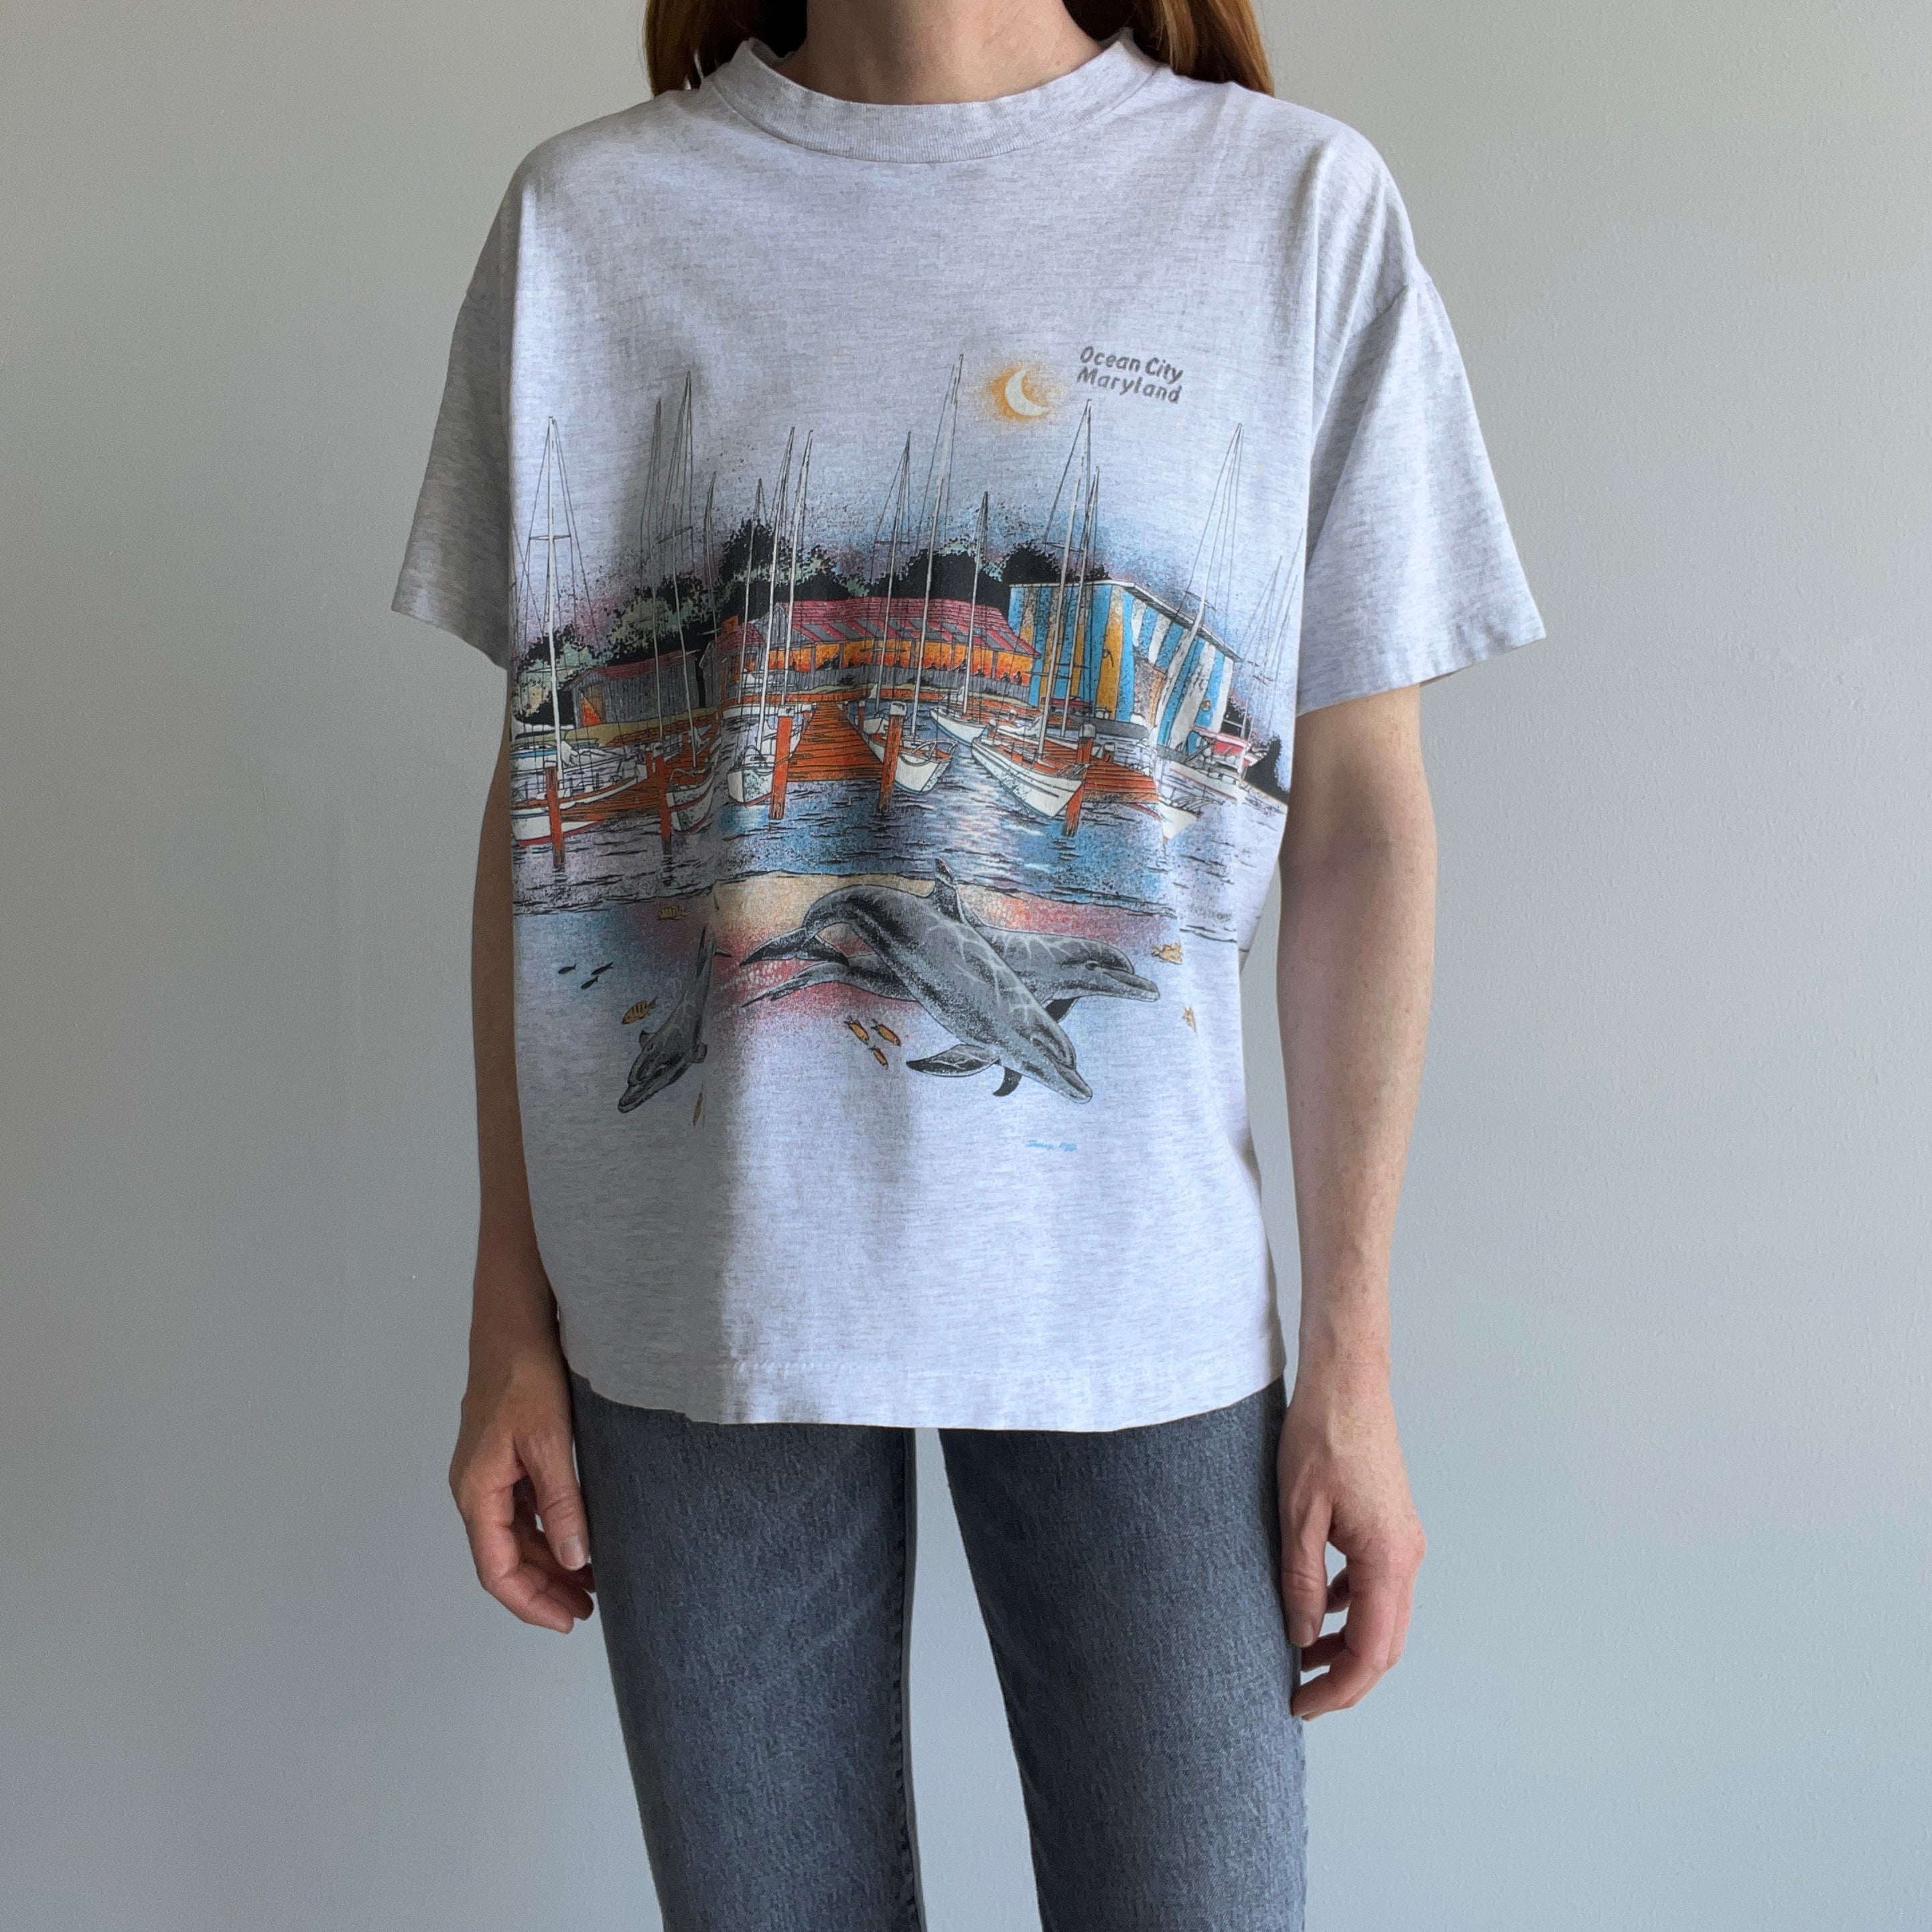 1980s OCEAN CITY Maryland Wrap Around T-Shirt